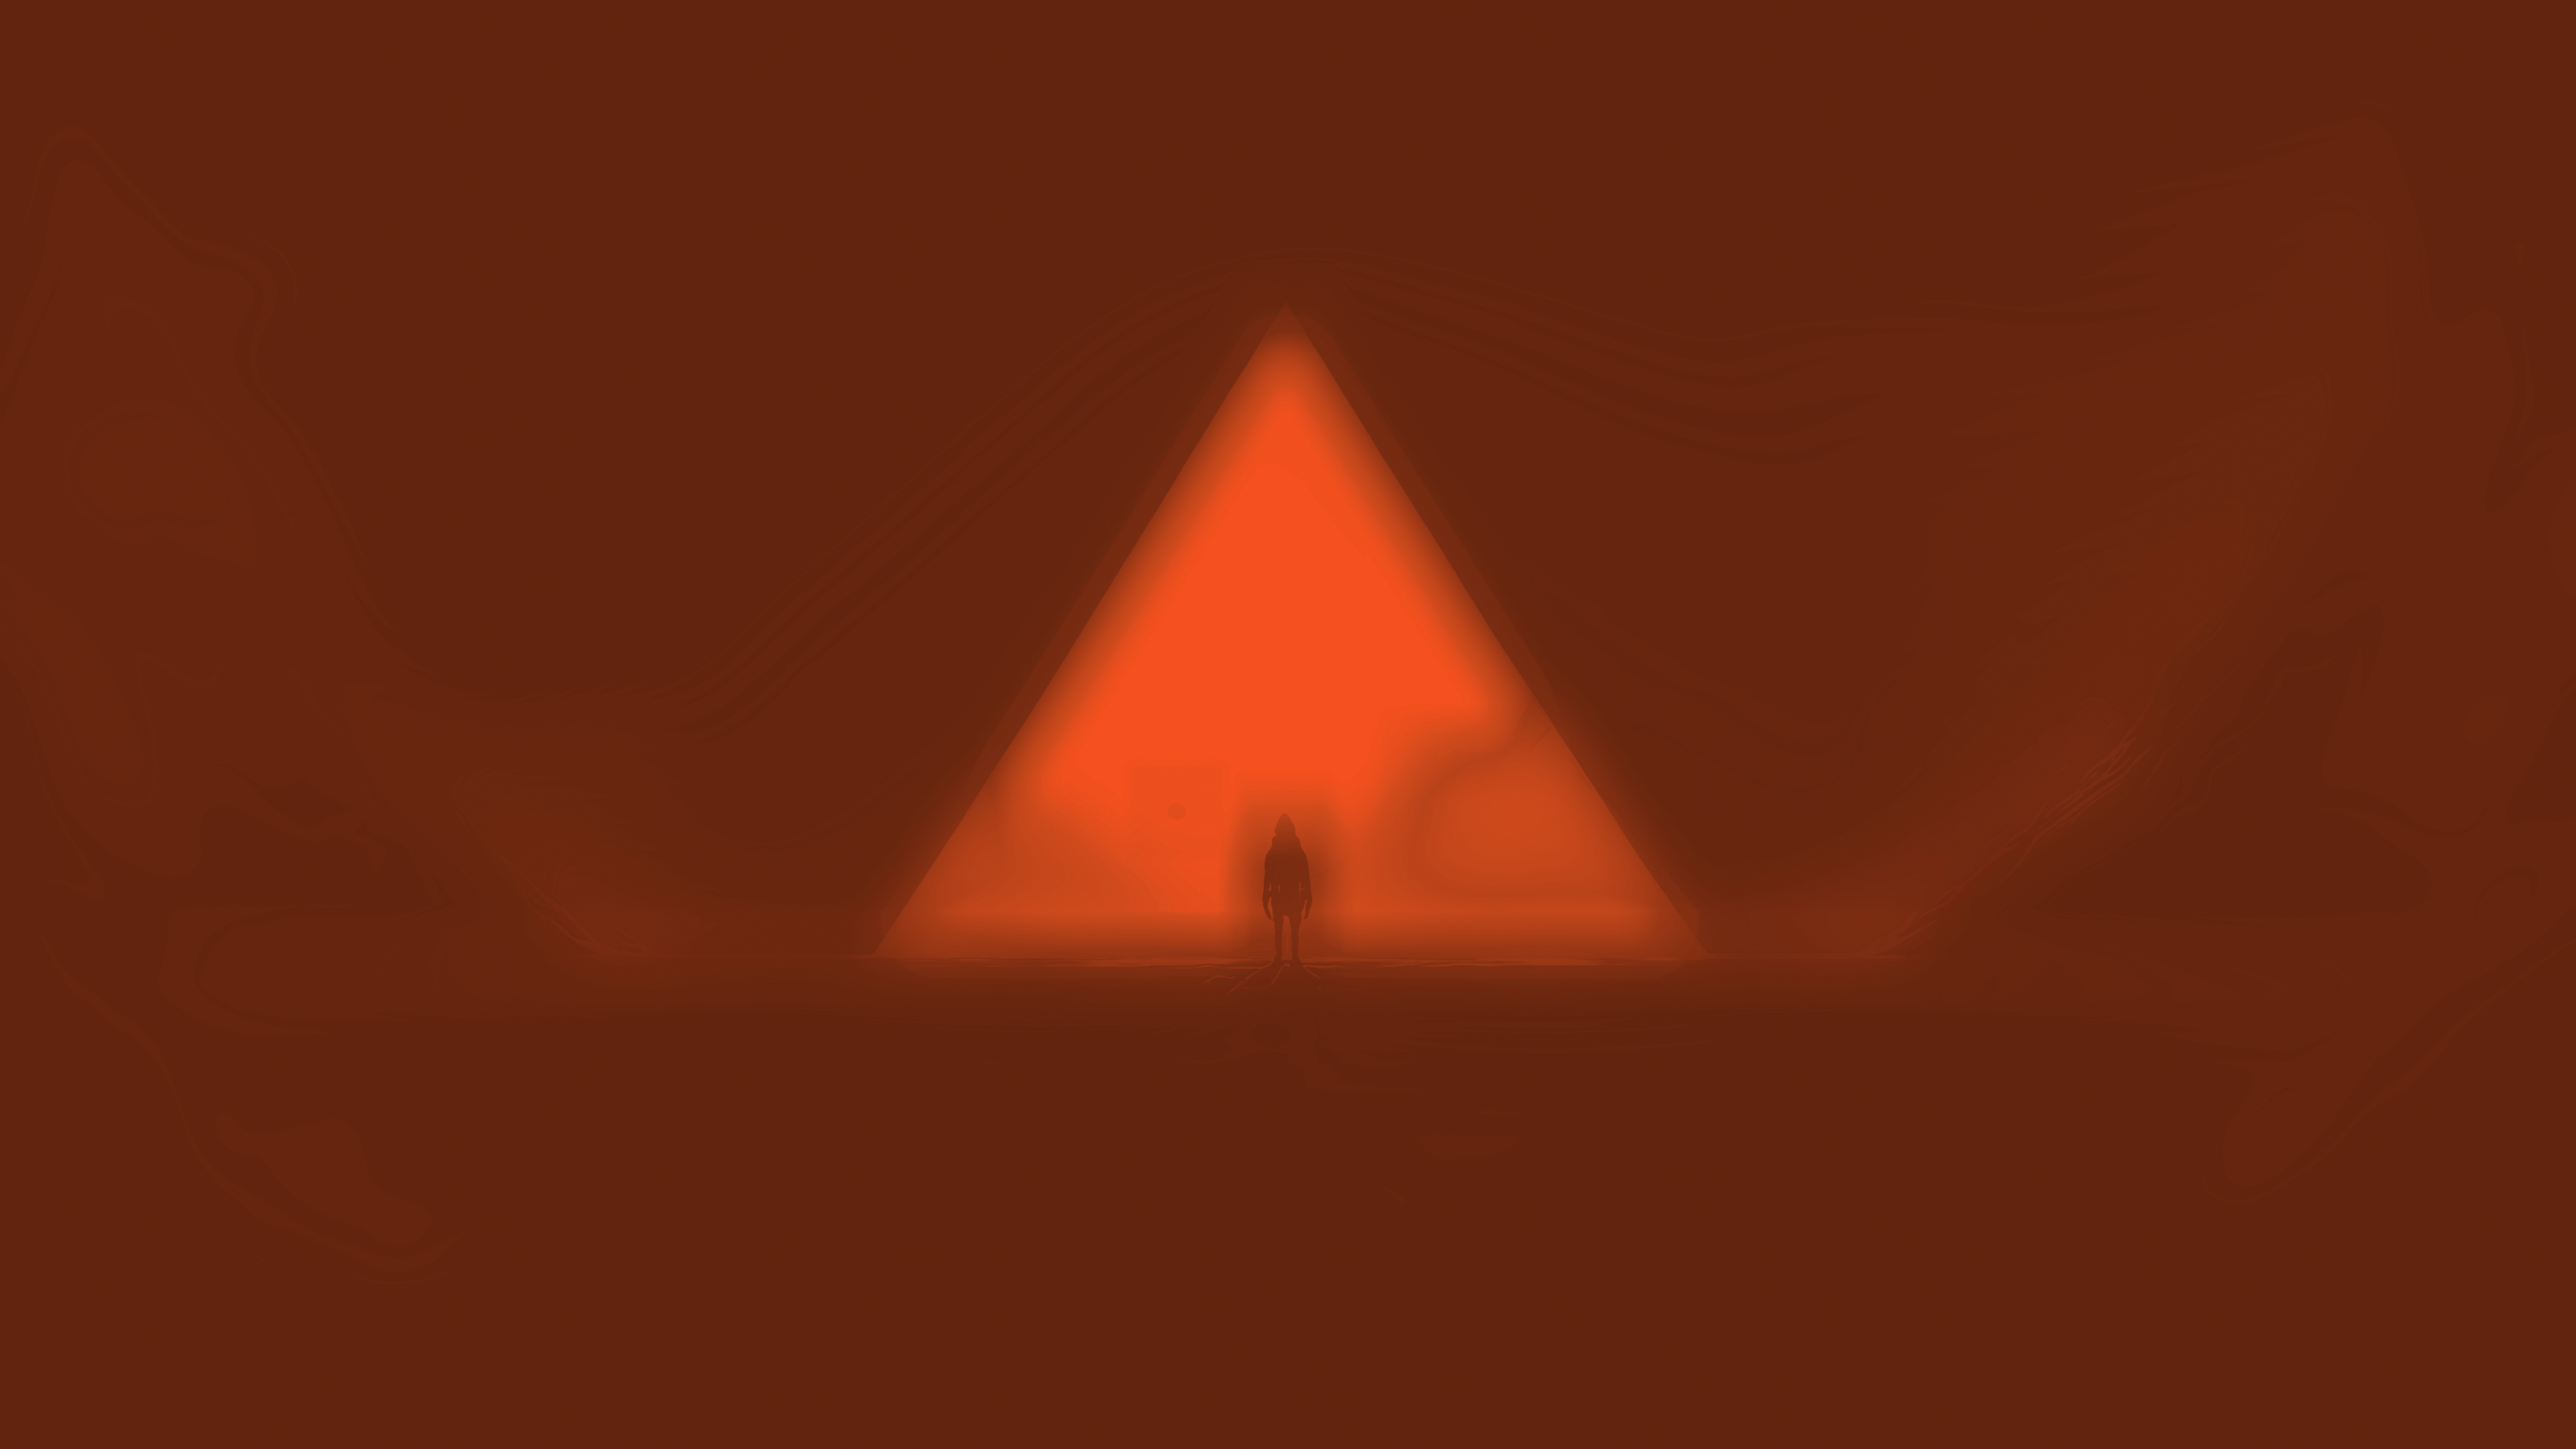 General 3840x2160 blurred warm colors orange brown dark background triangle minimalism digital art simple background